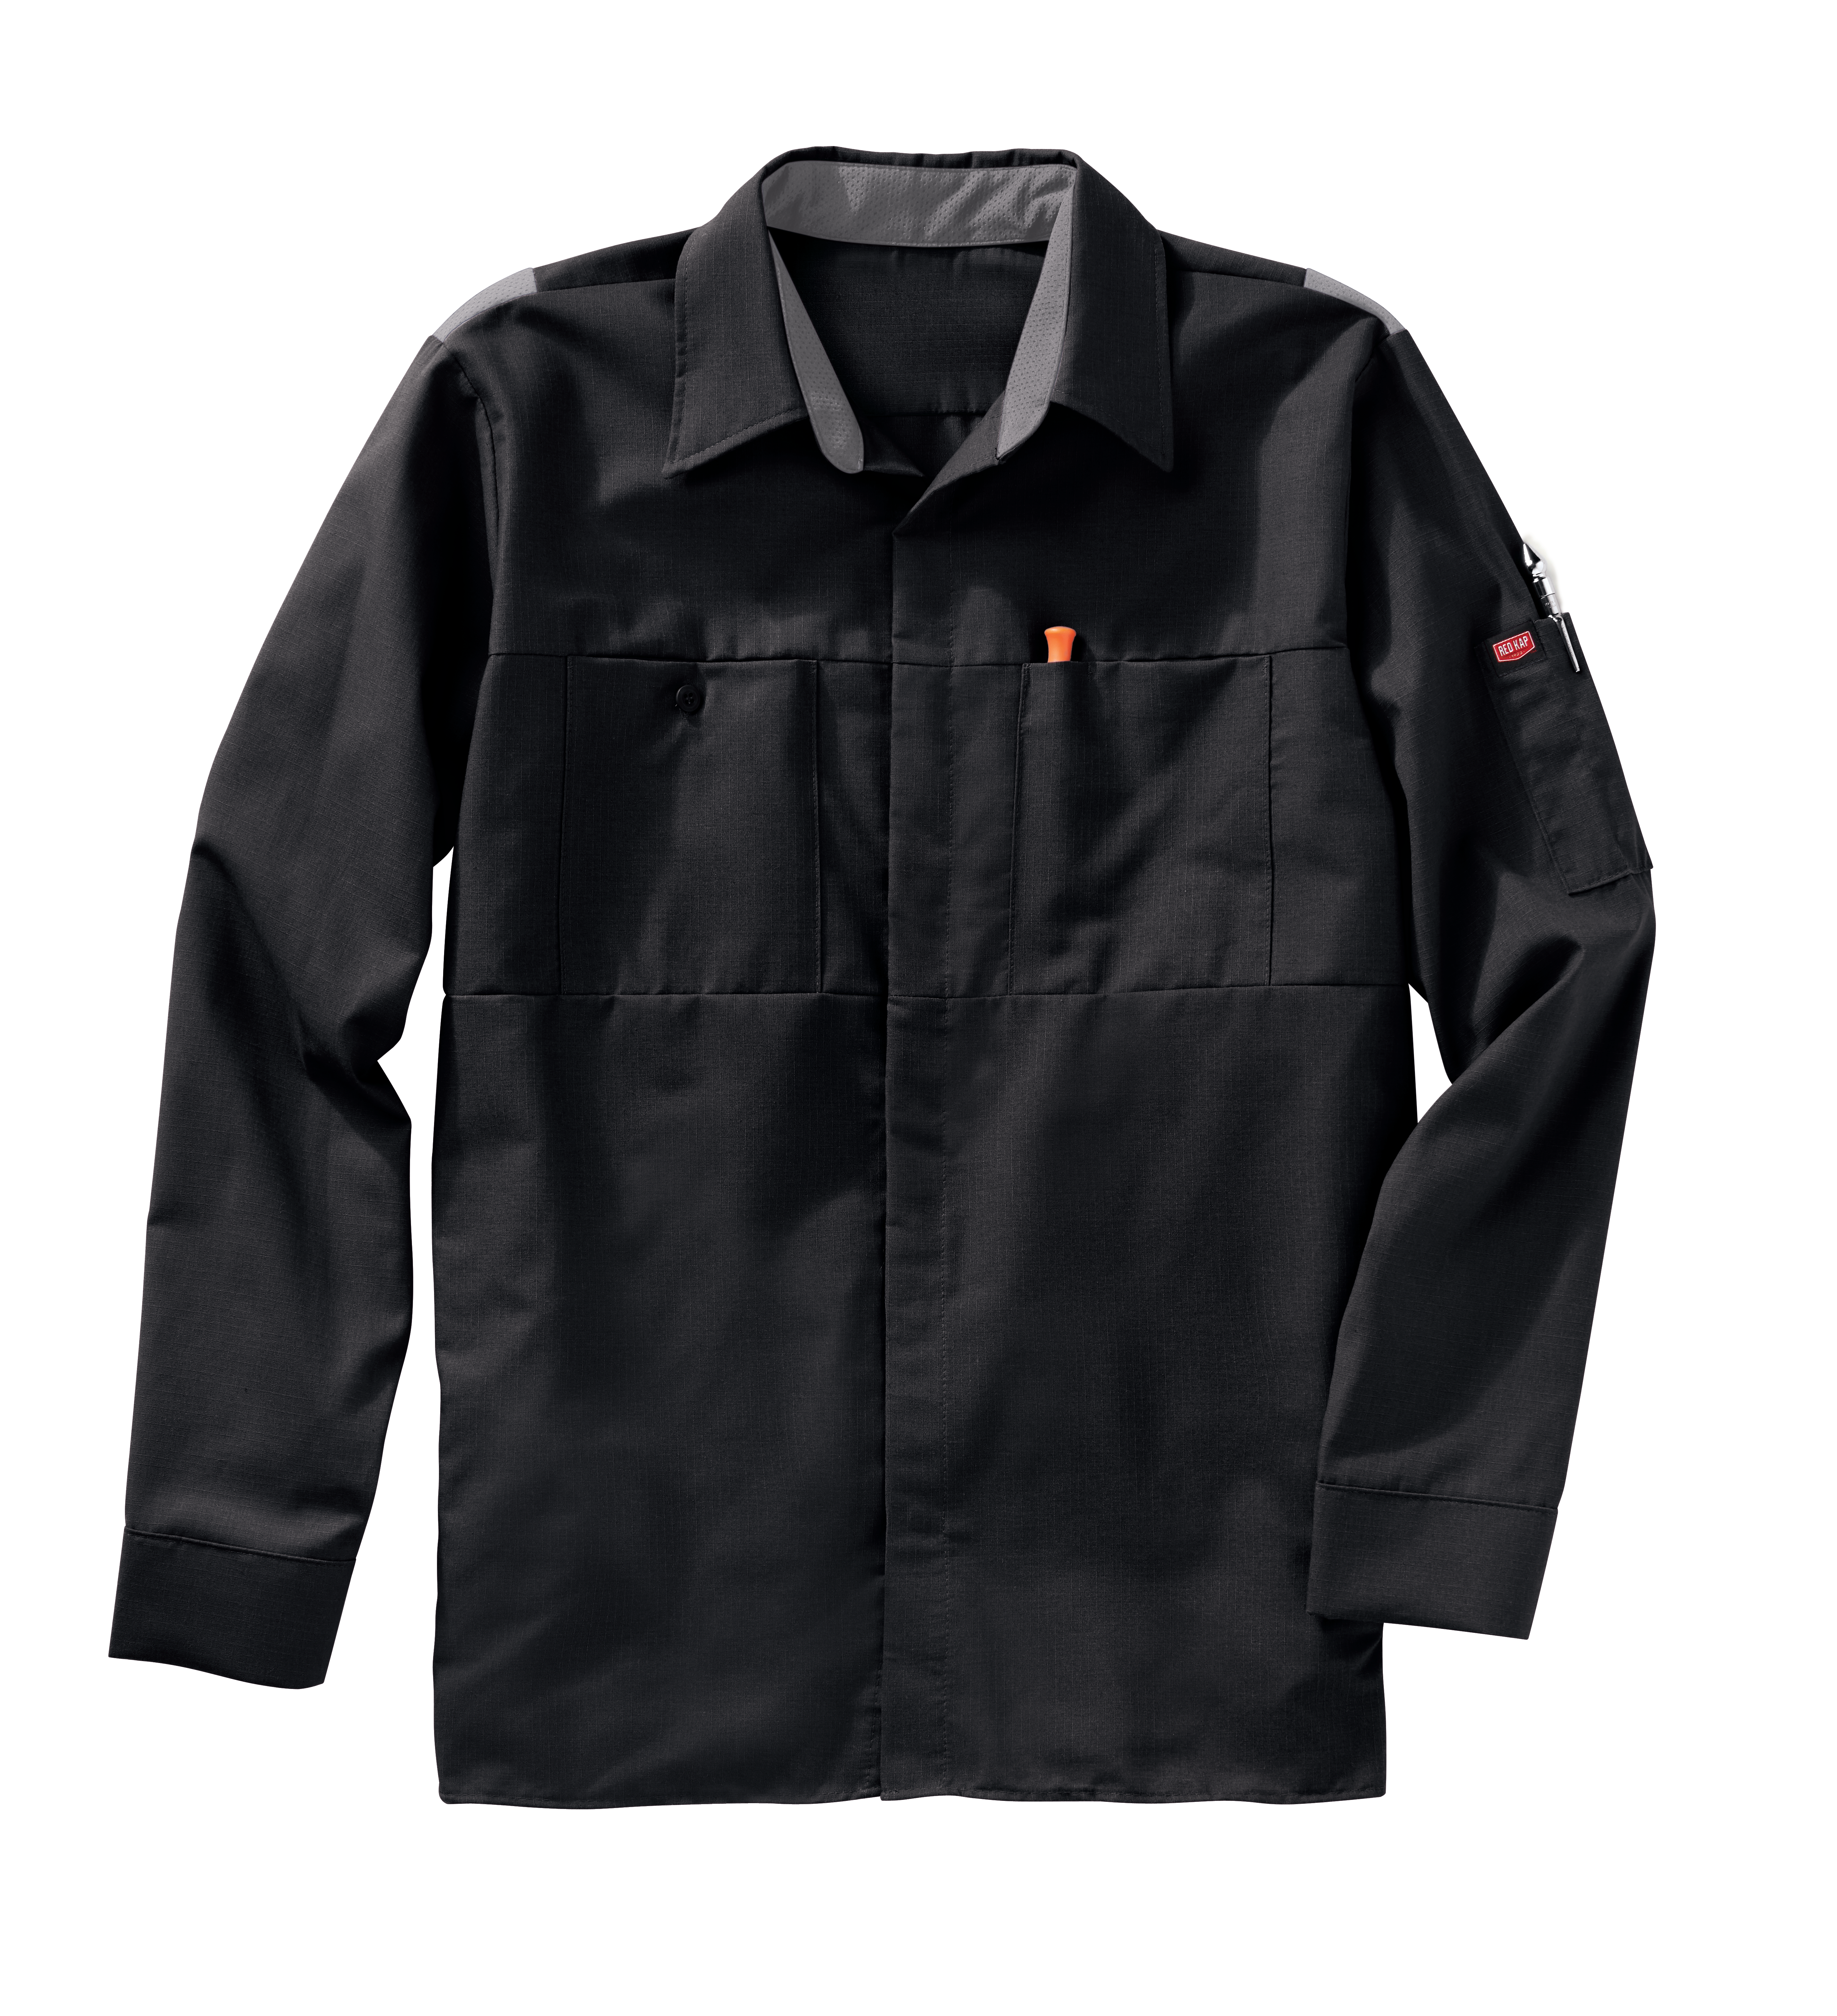 Red Kap Men's Performance Plus Shop Shirt with Oilblok Technology 